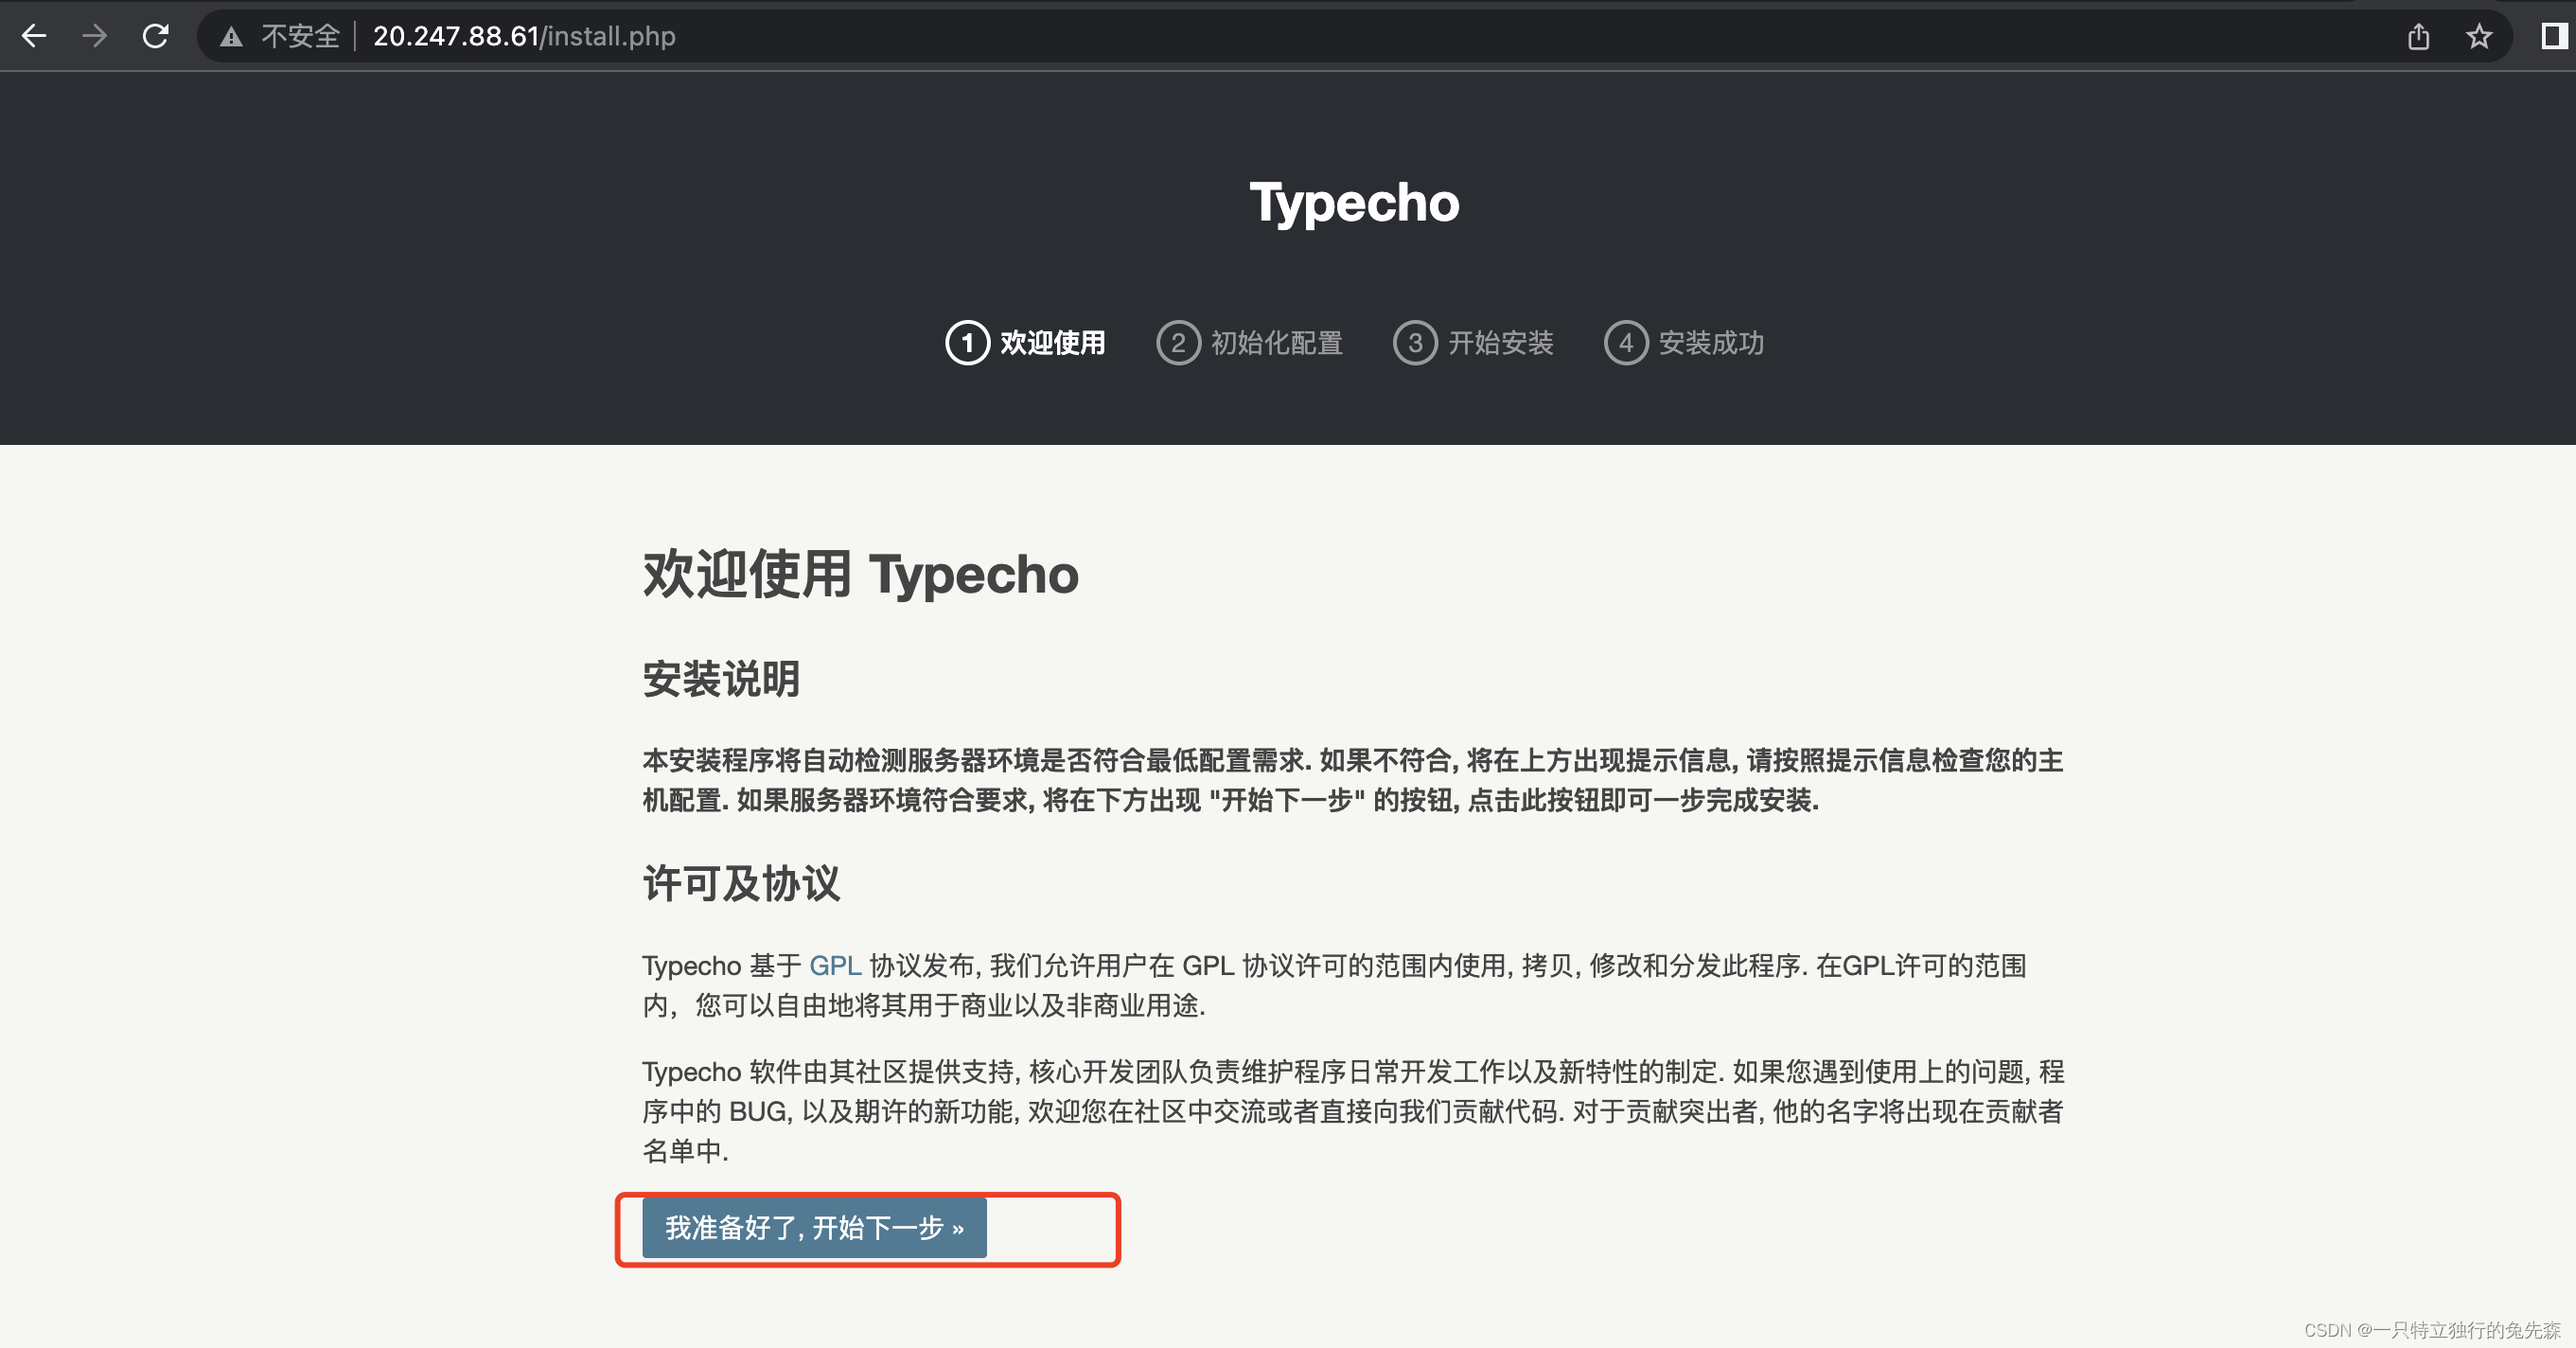 【Microsoft Azure 的1024种玩法】七十一.基于Azure Virtual Machines快速上手搭建Typecho博客系统_Typecho博客系统_29